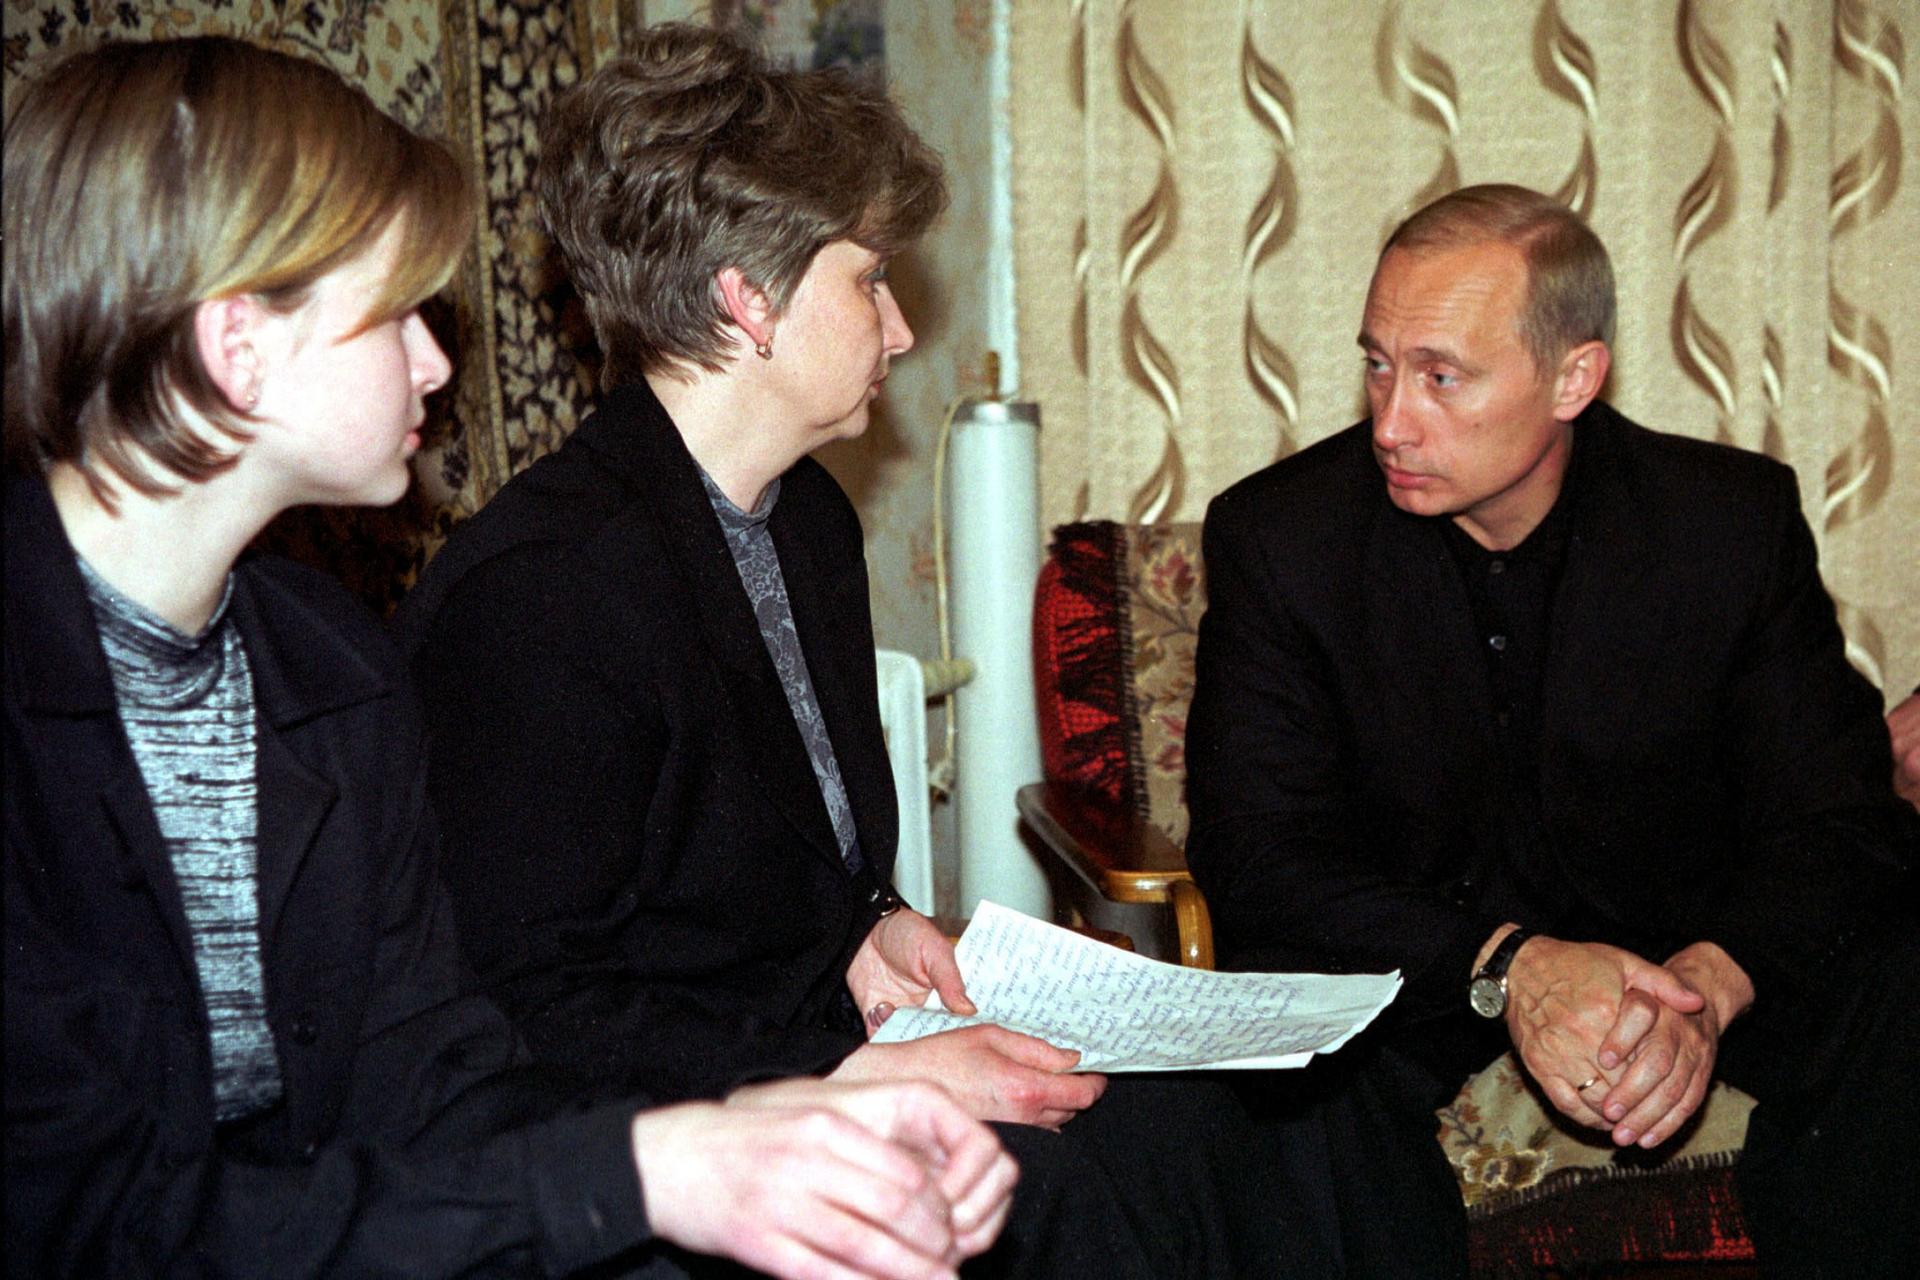 Vladimir Putin talks with two women